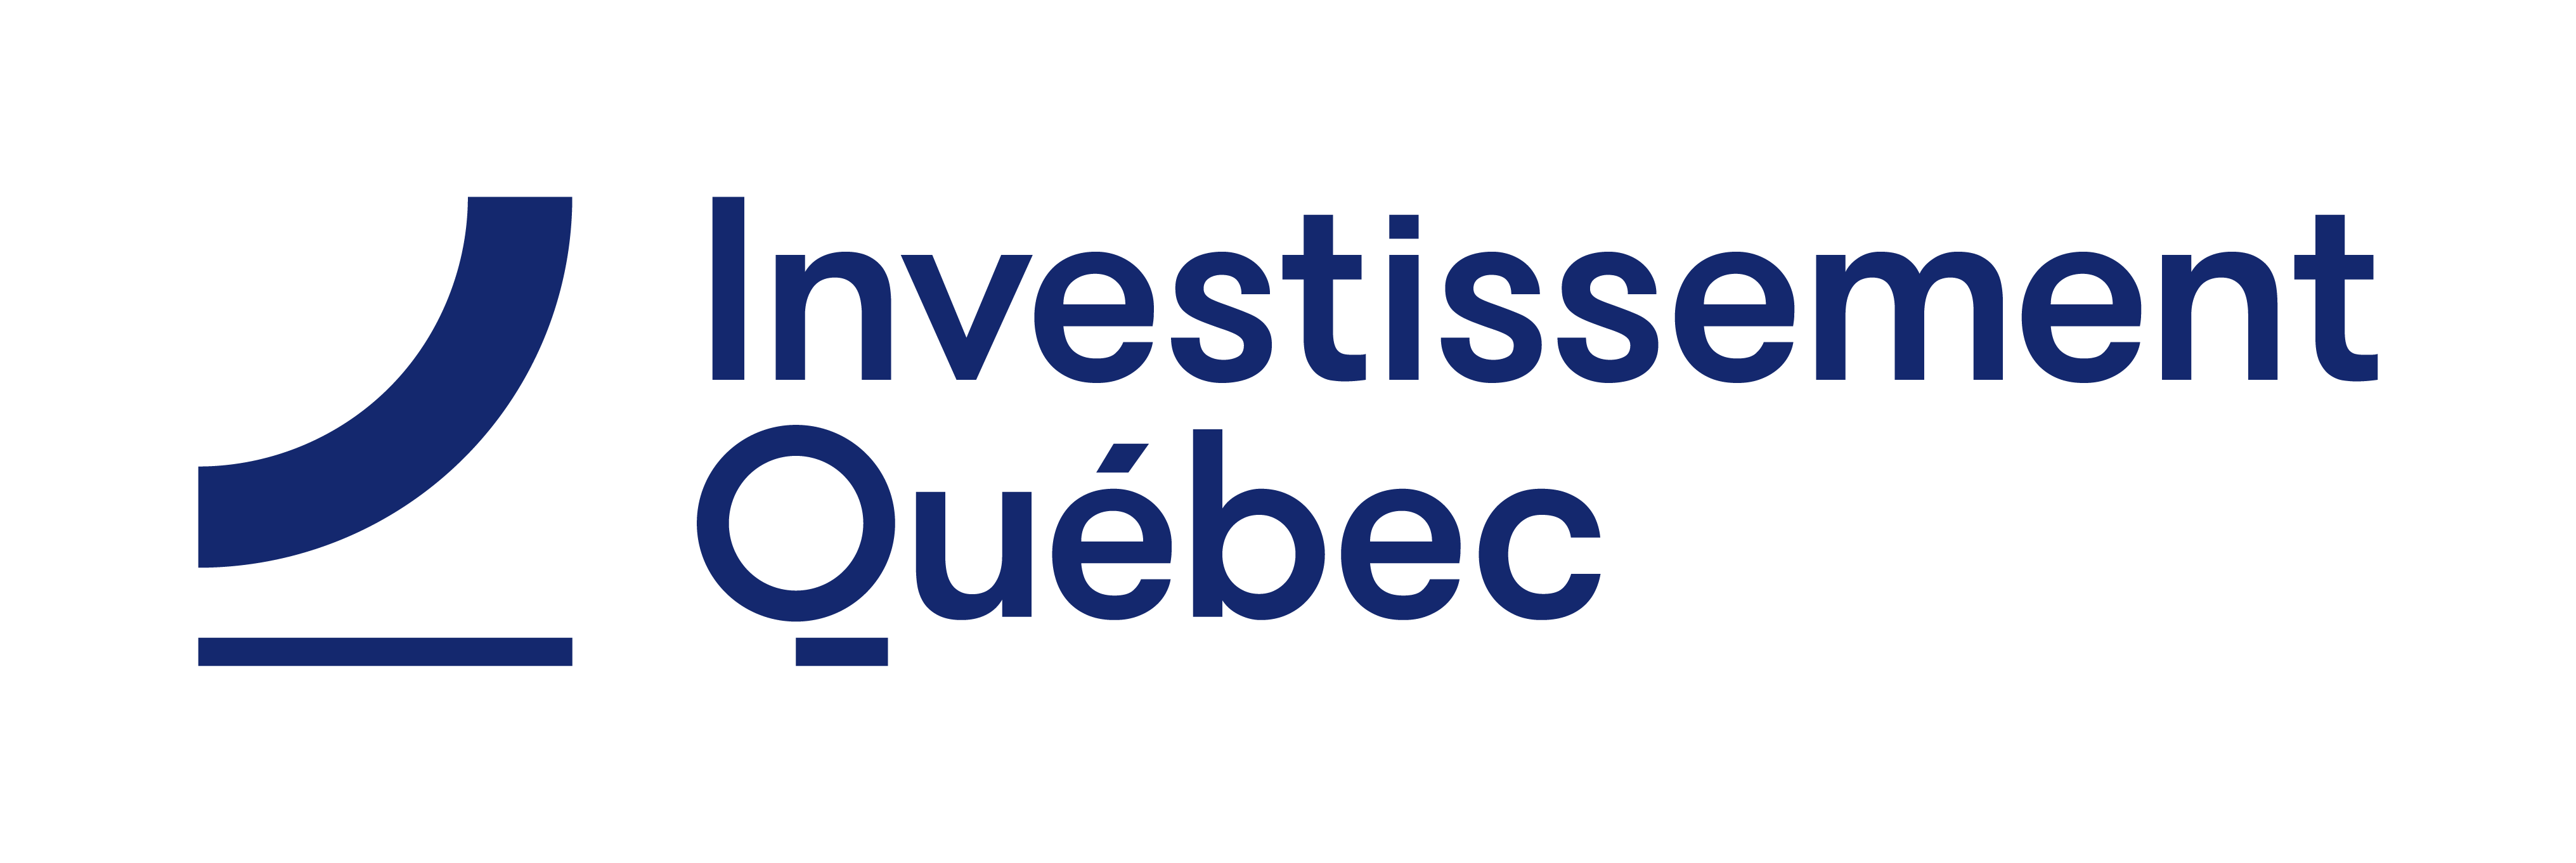 Québec - automotive meetings queretaro program 